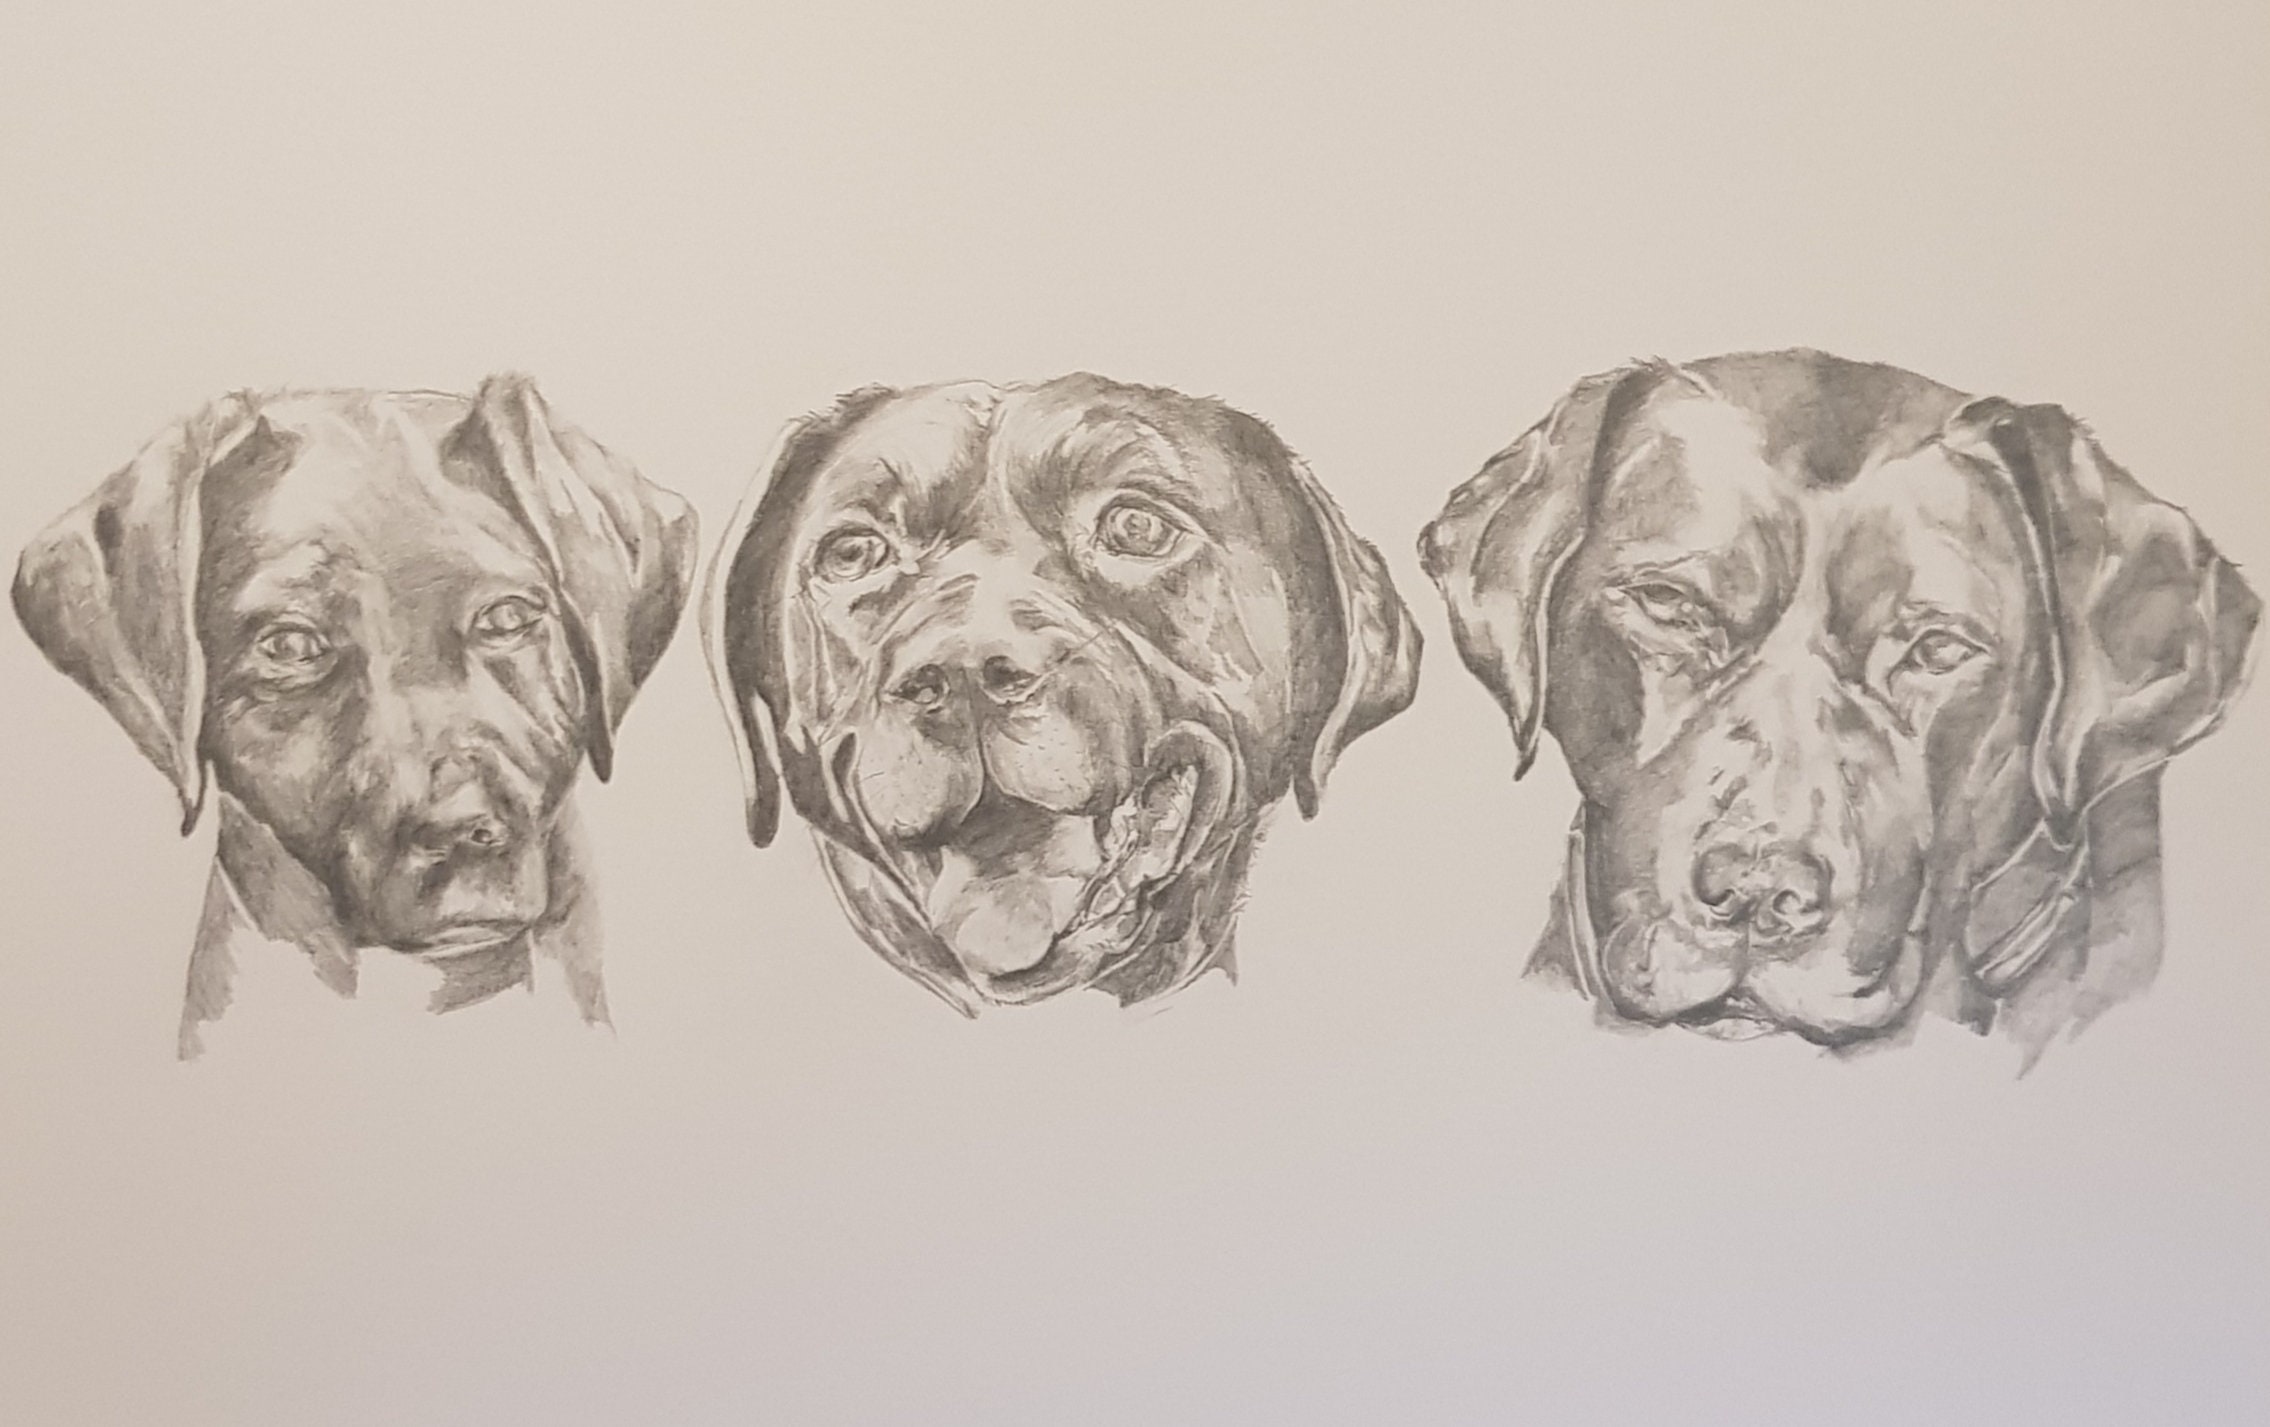 My art supplies – I Sketch Pets